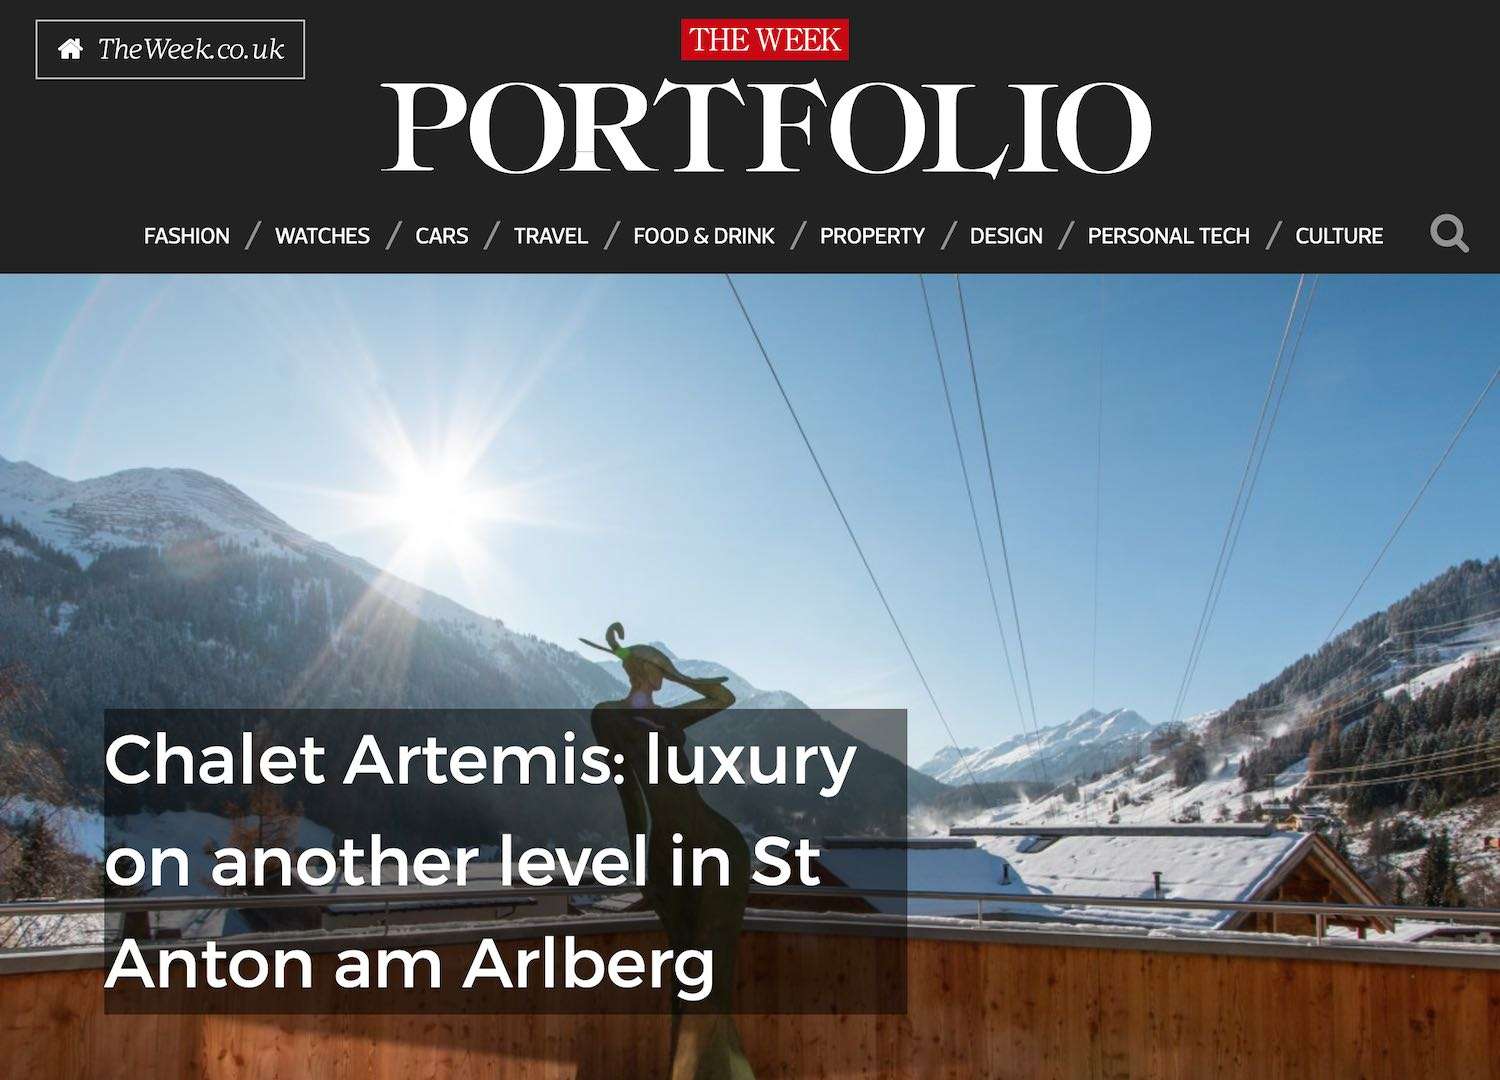 Luxury Chalet Artemis St Anton Austria - The Week Portfolio article